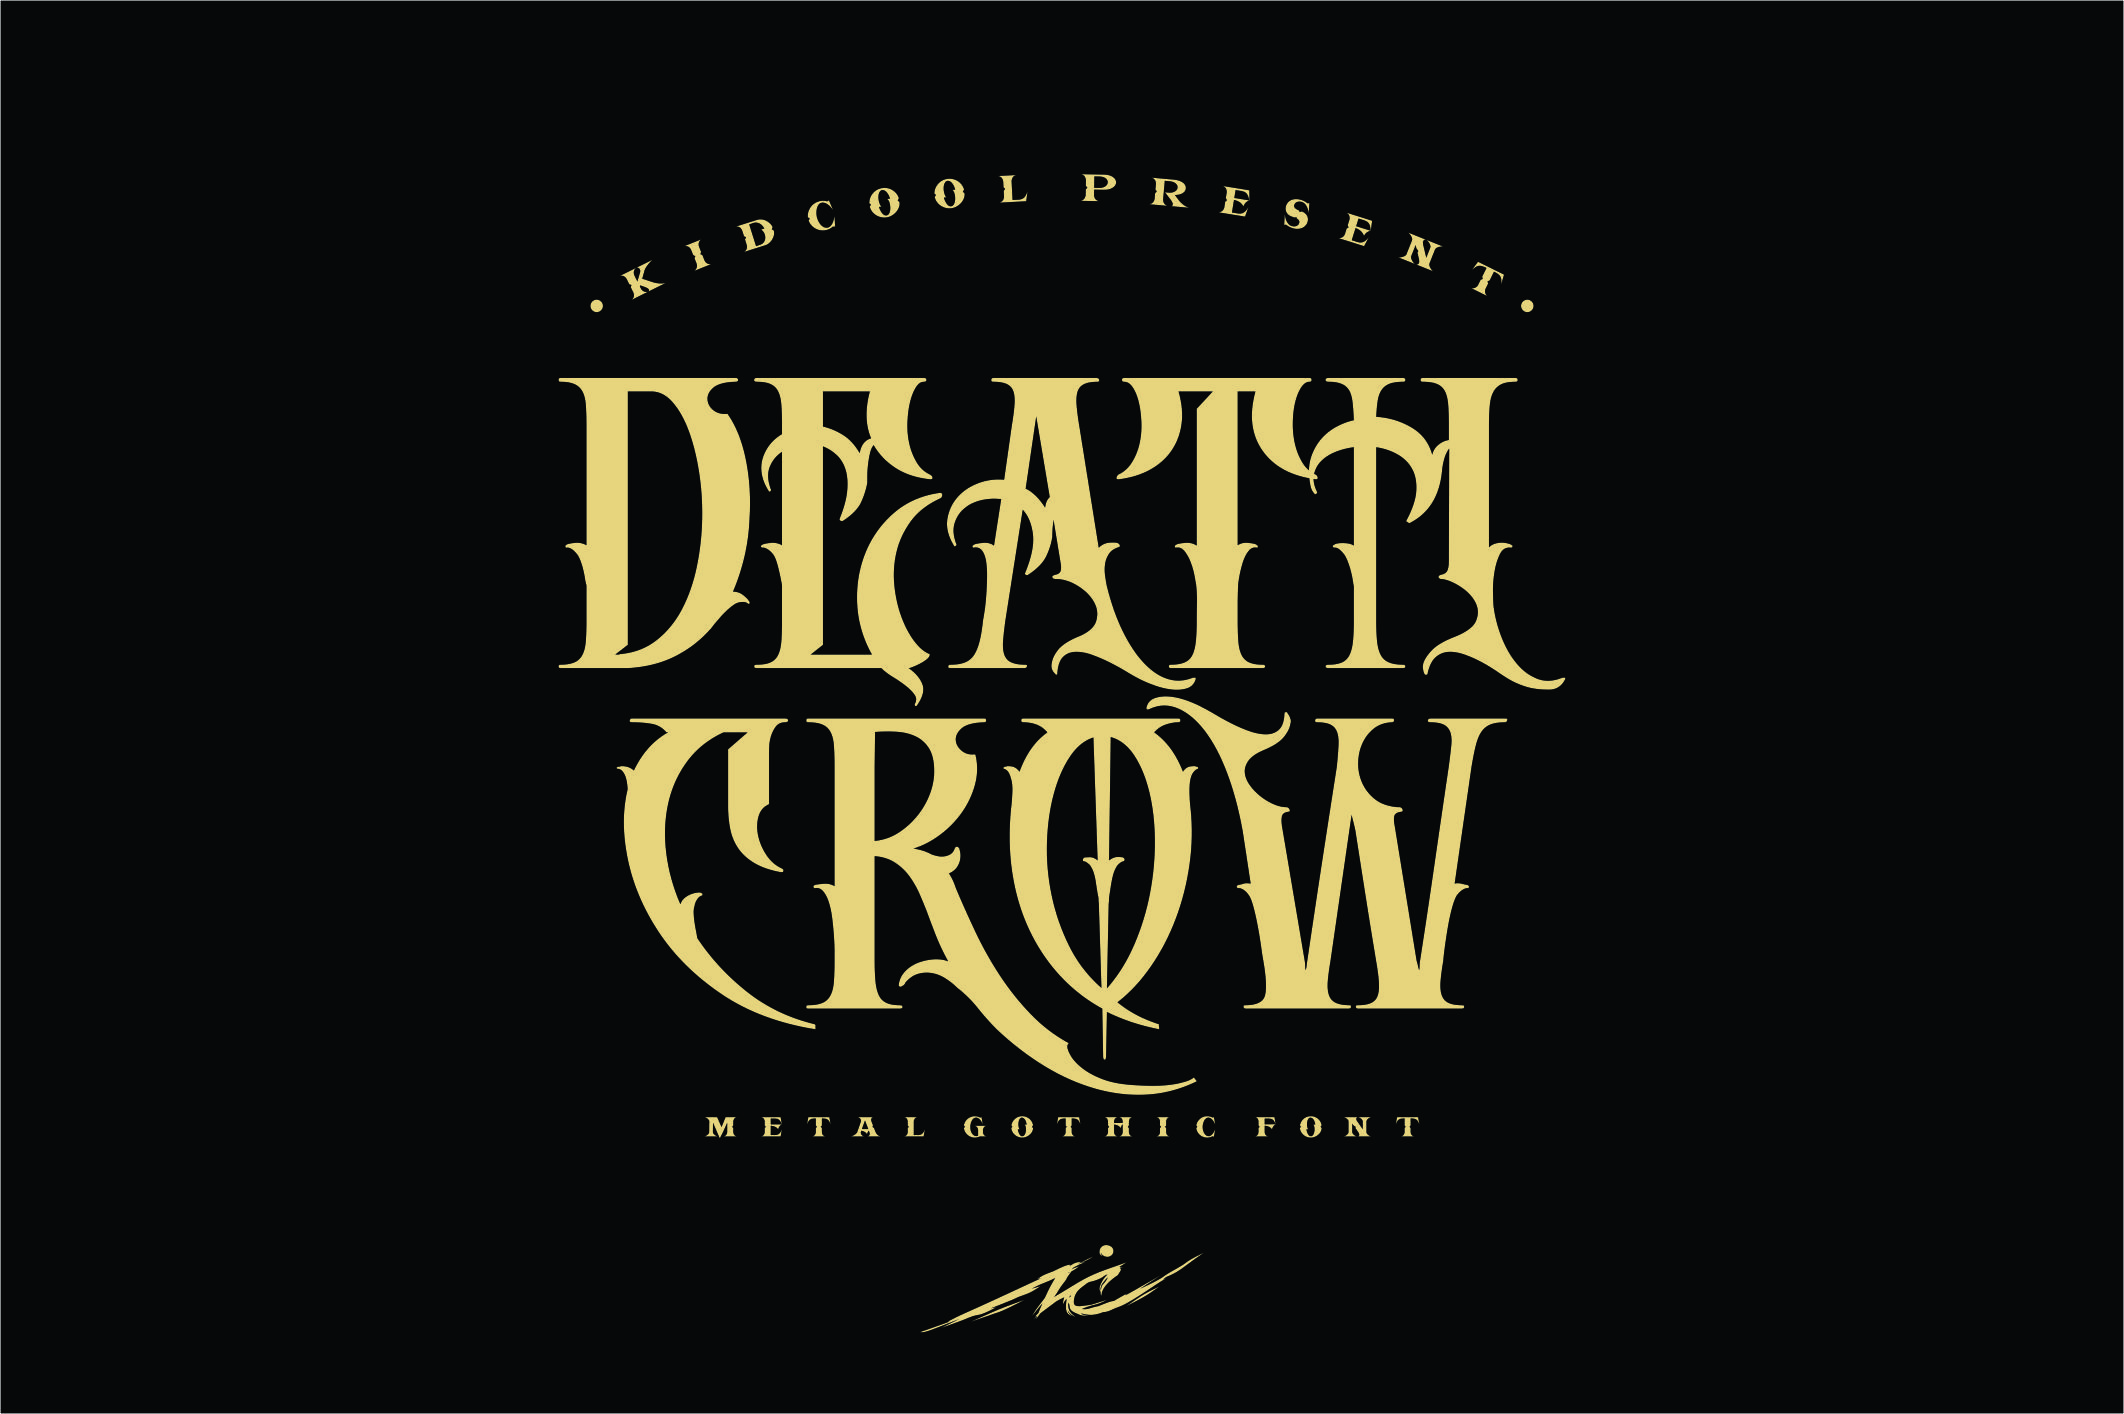 DEATH CROW